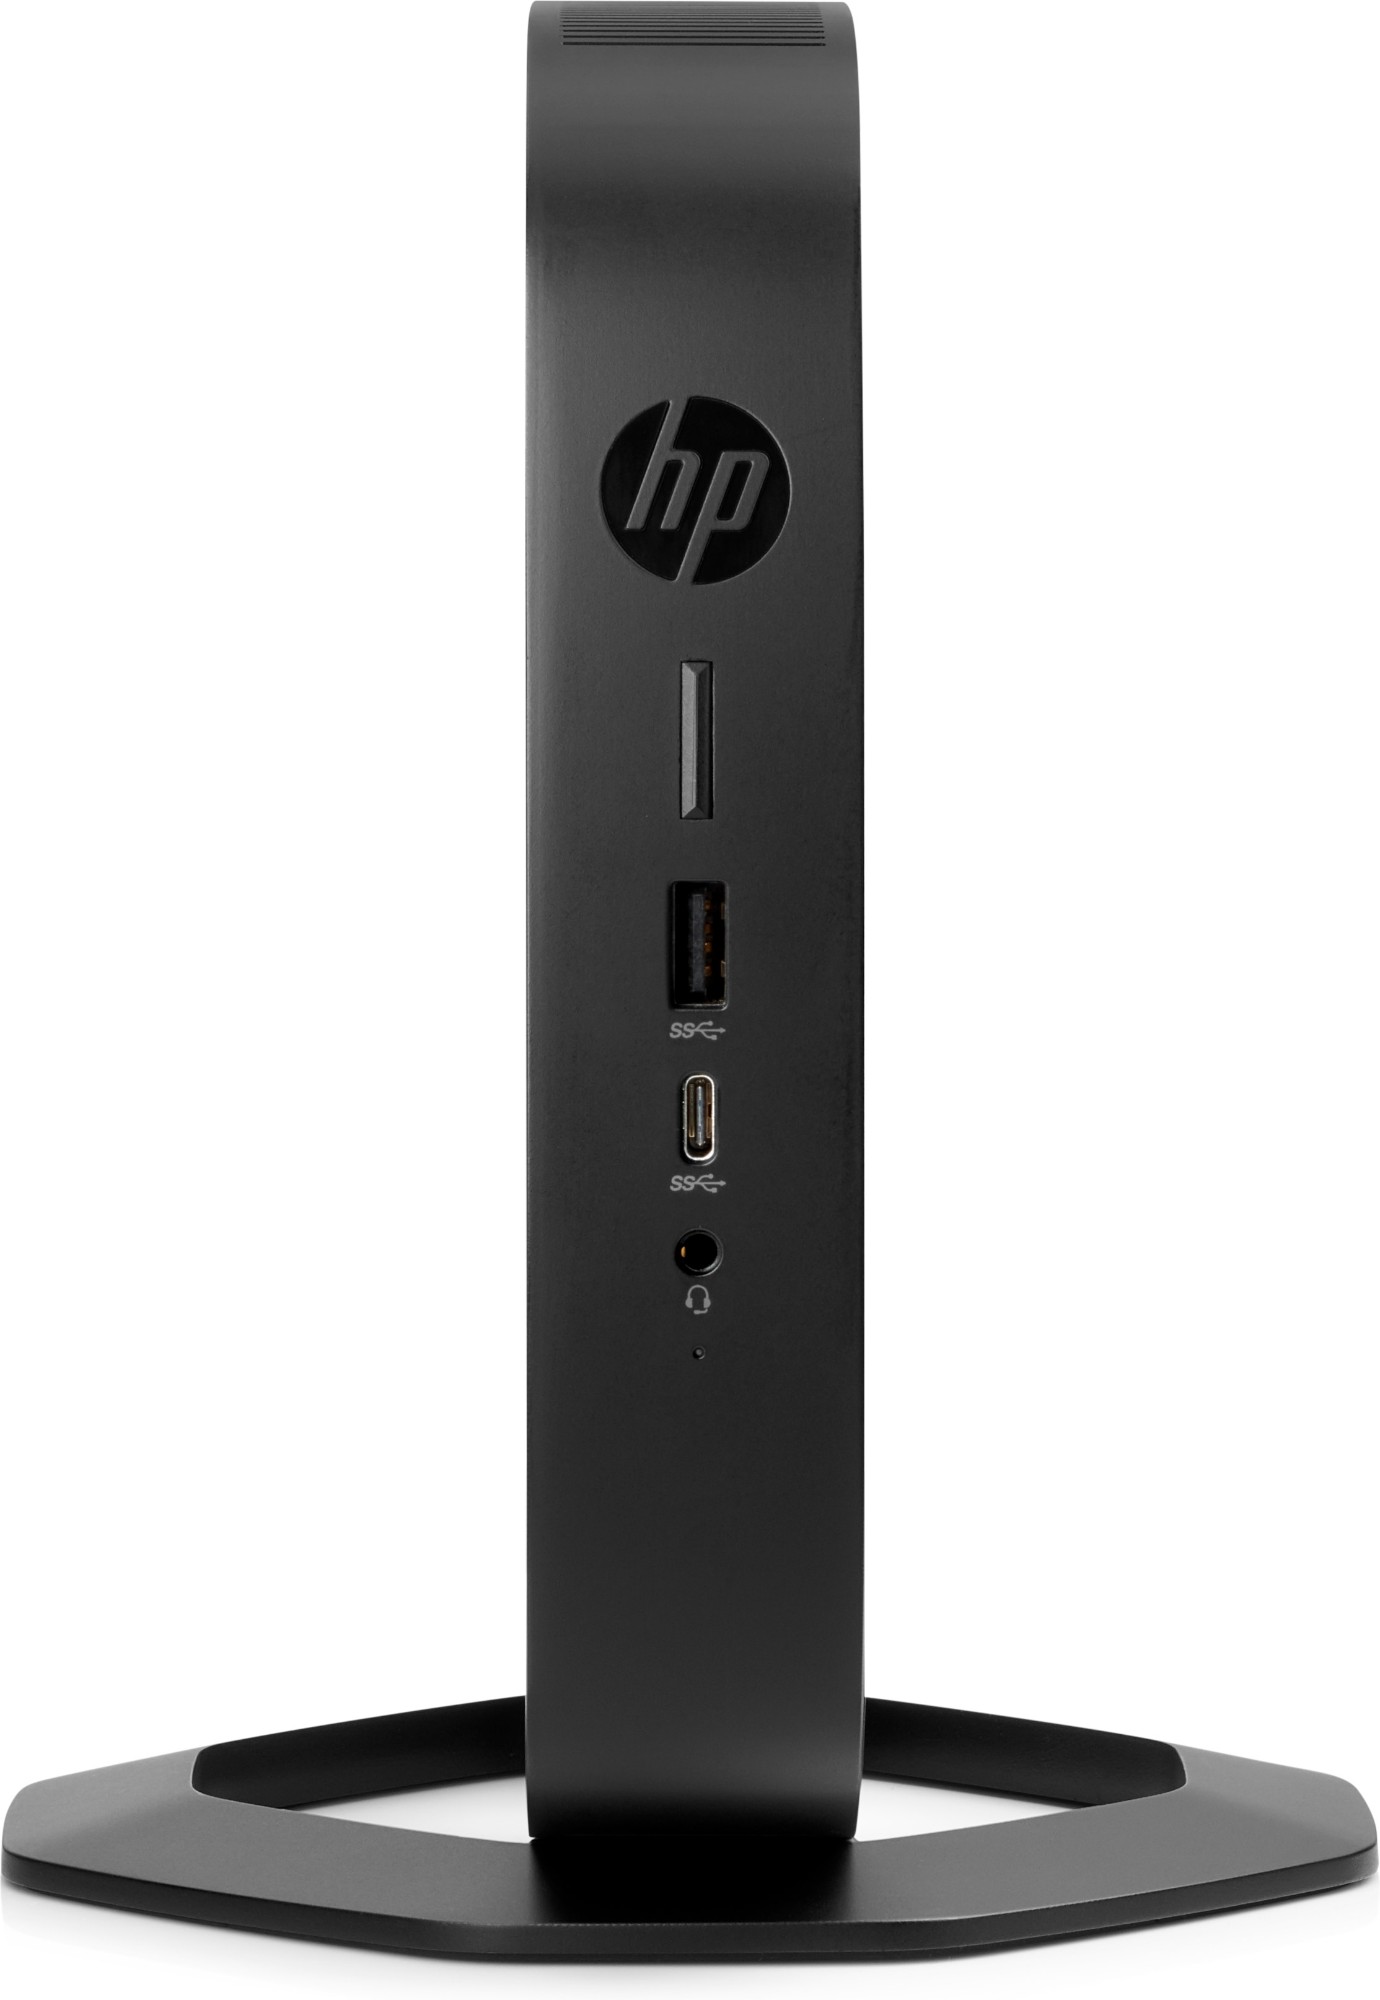 HP t540 1.5 GHz ThinPro 1.4 kg Black R1305G